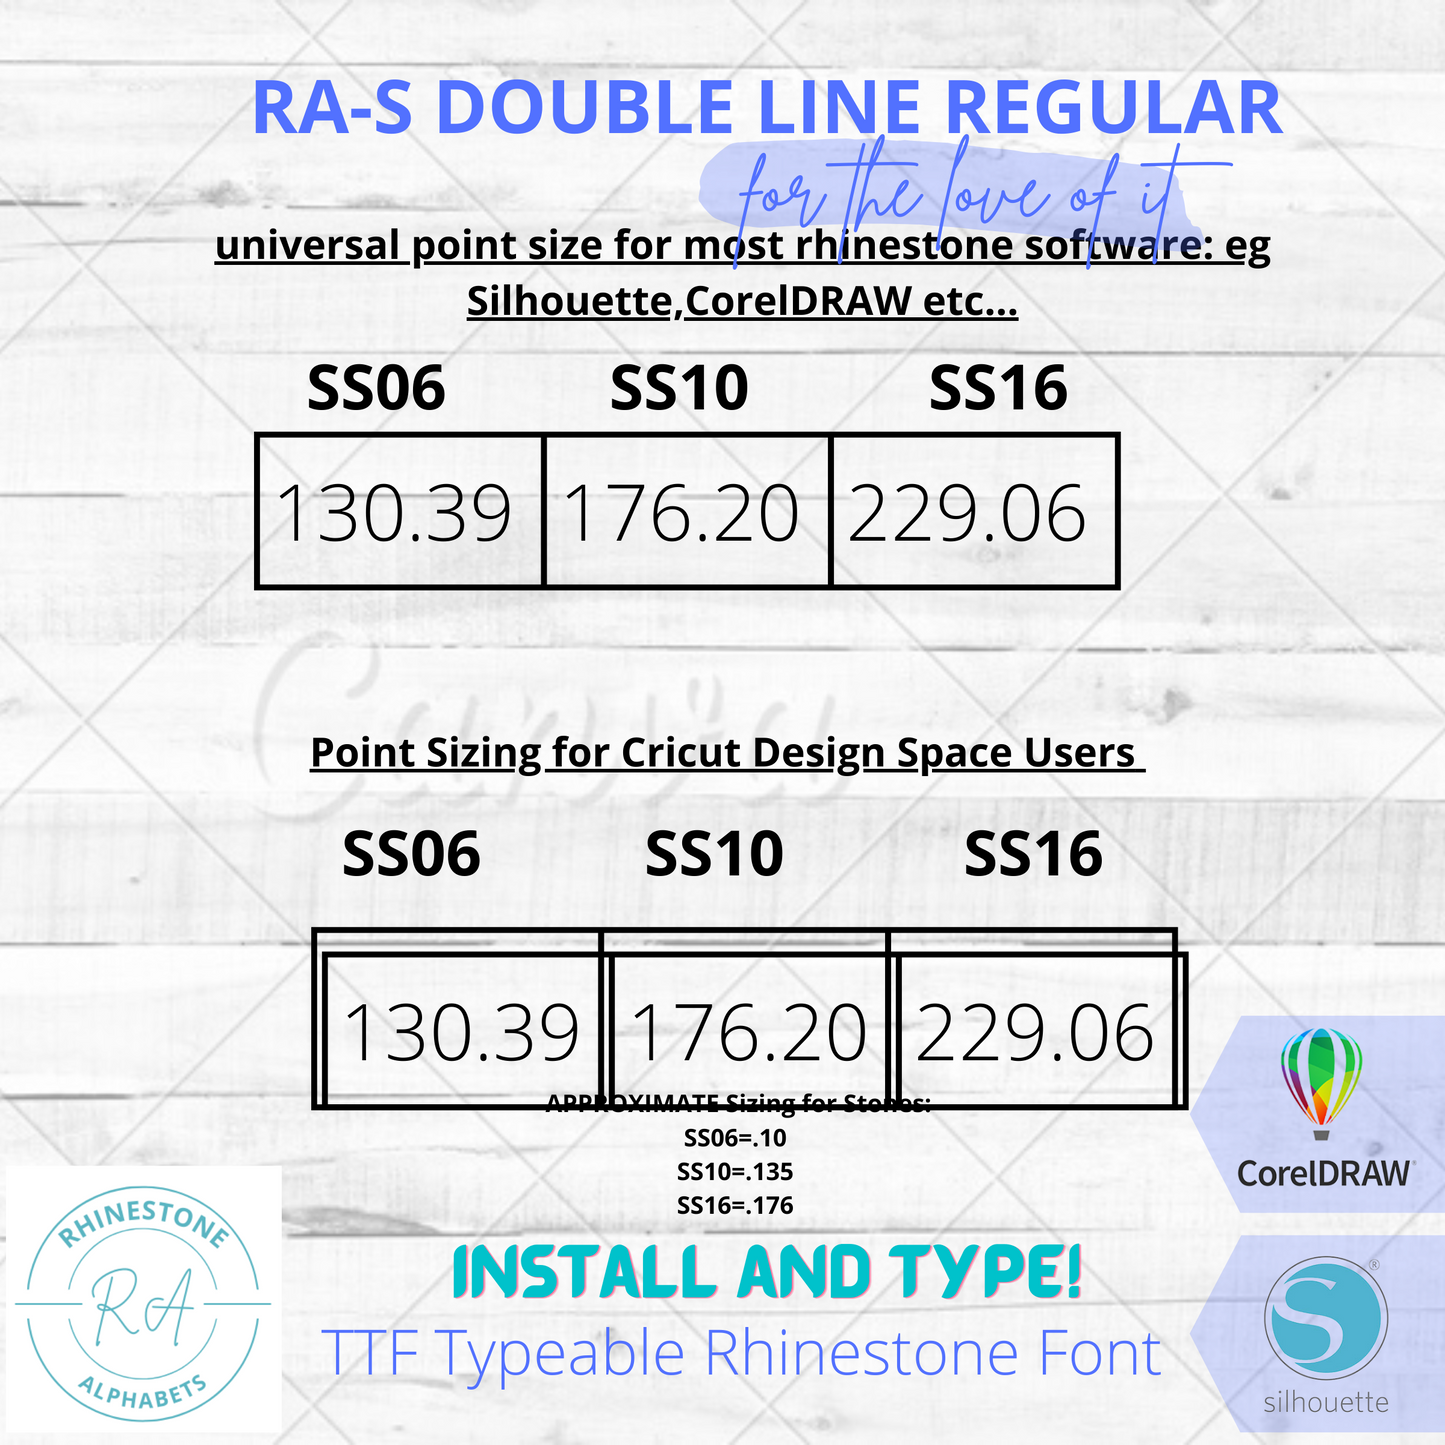 RA-S Doubleline Regular